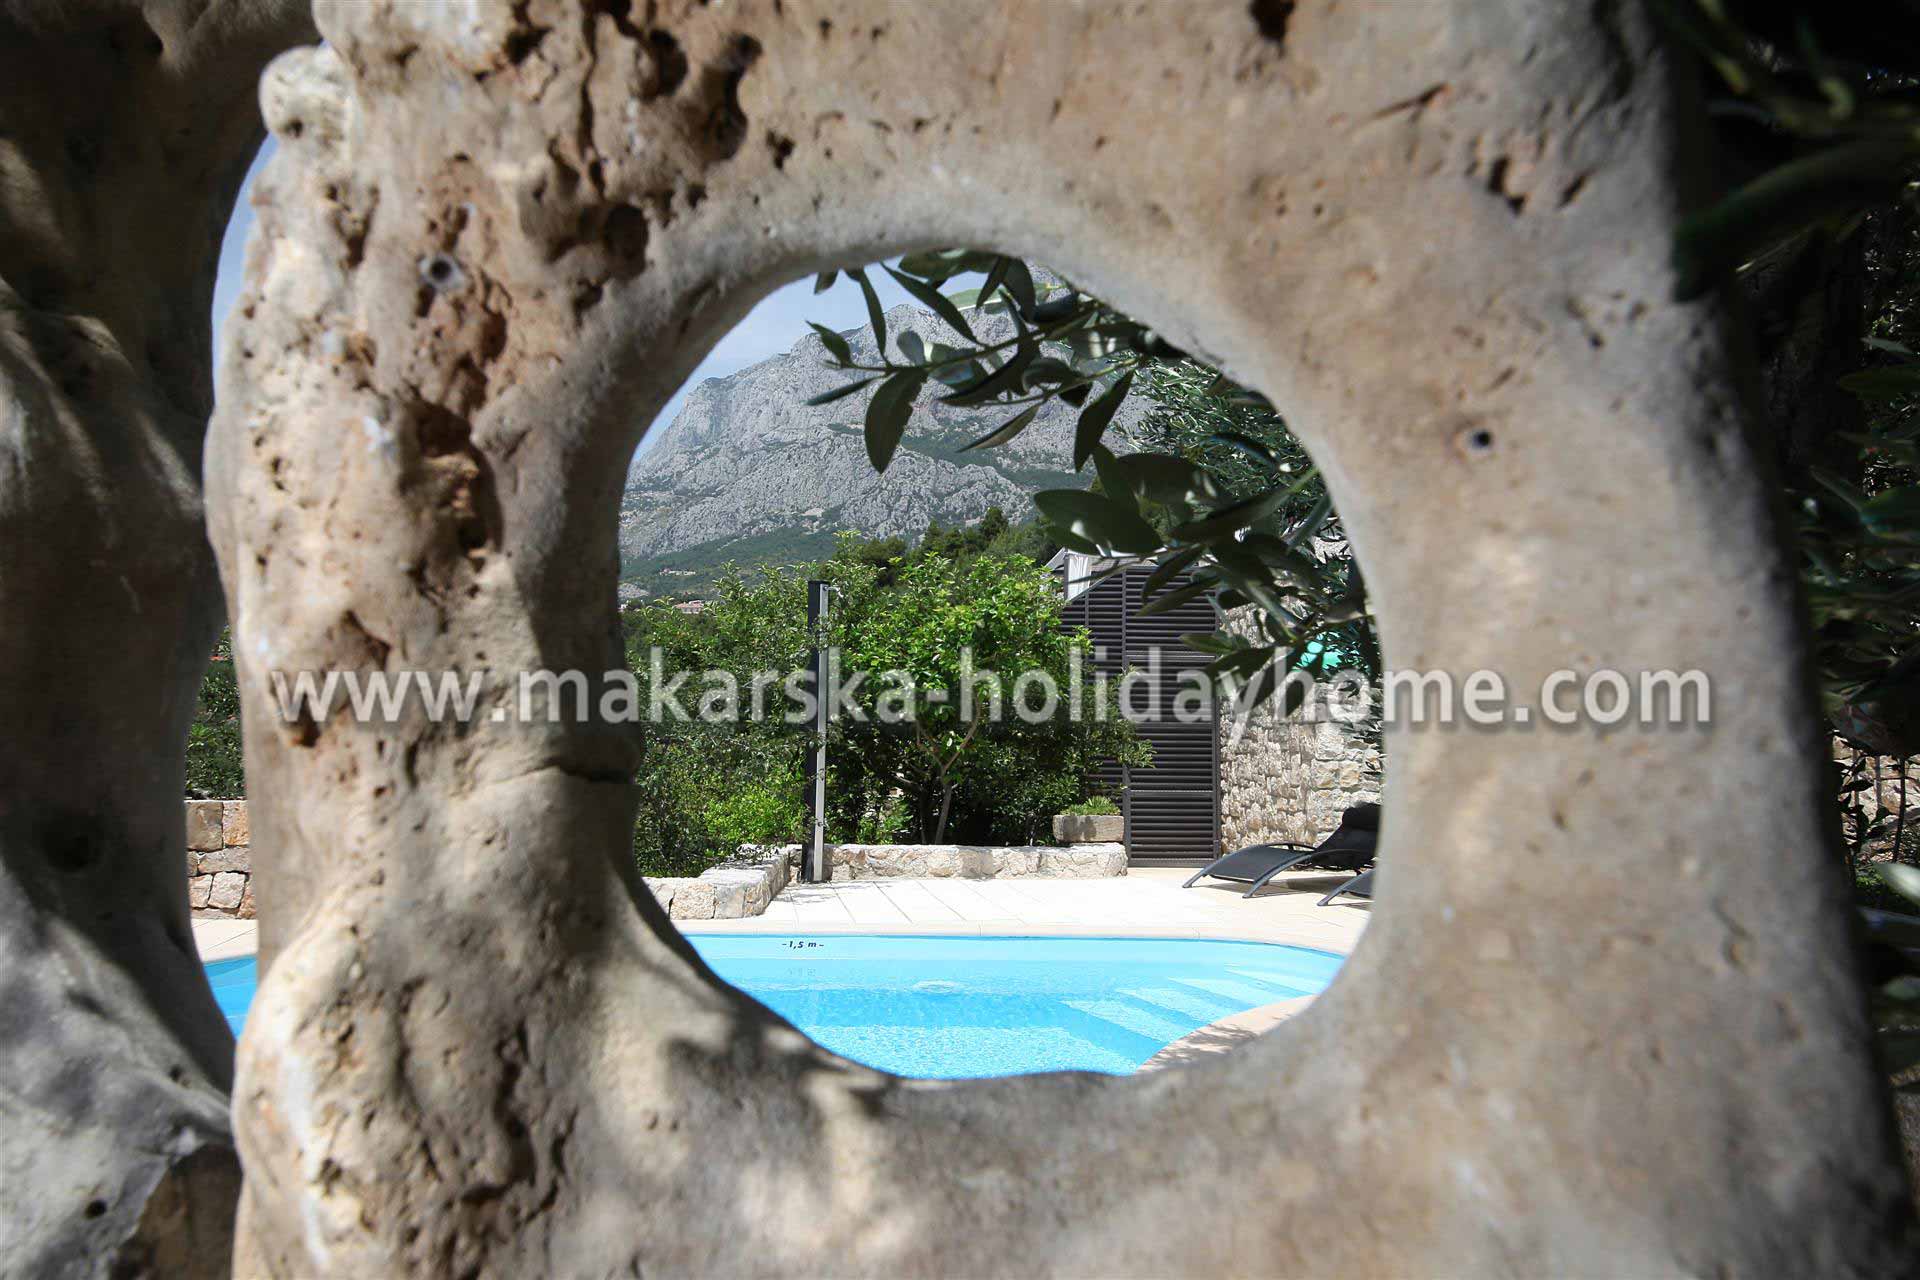 Luxury villa with Pool Makarska - Villa Ante / 09